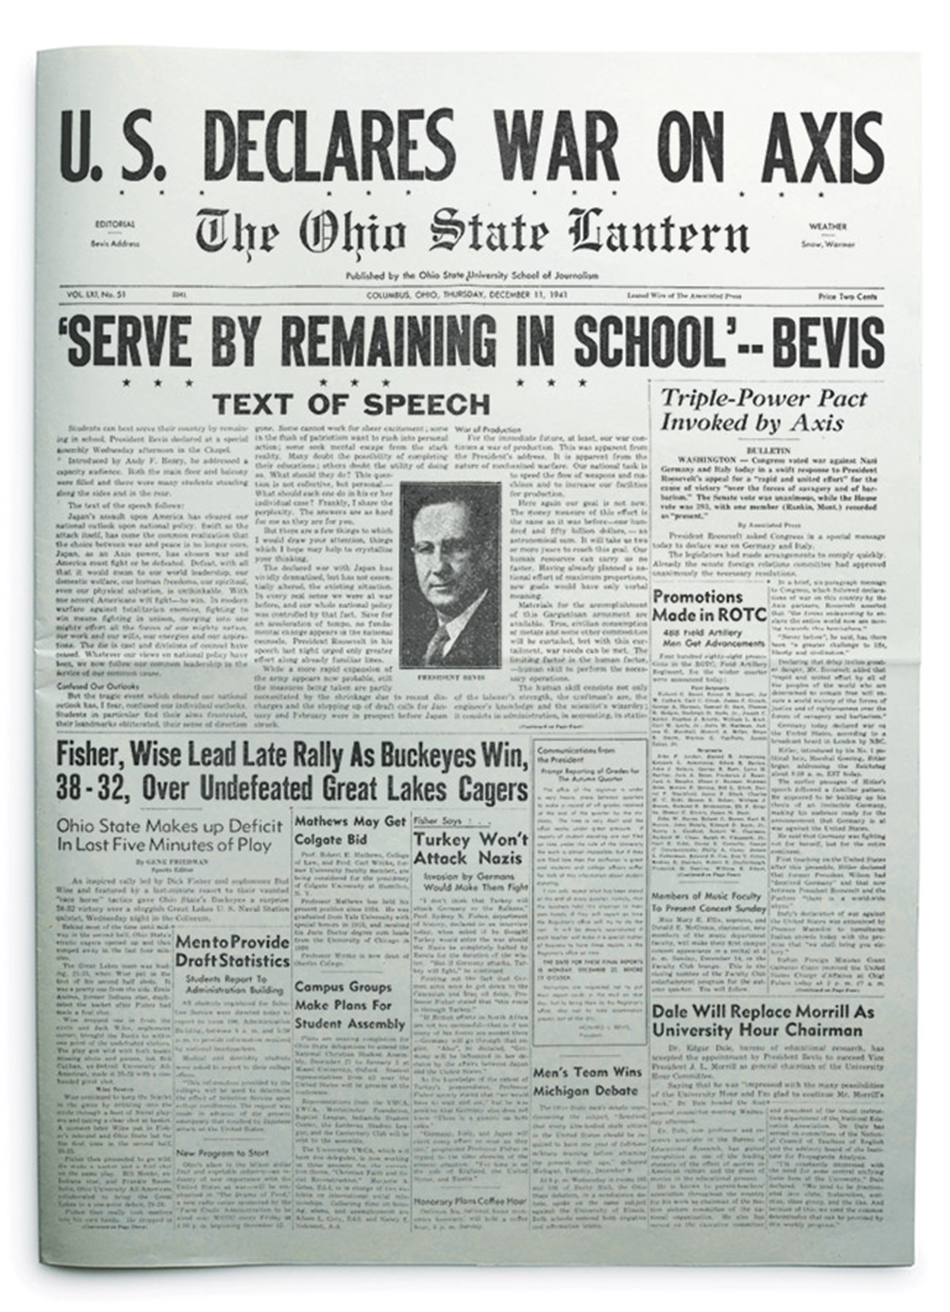 December 11, 1941 Lantern front cover